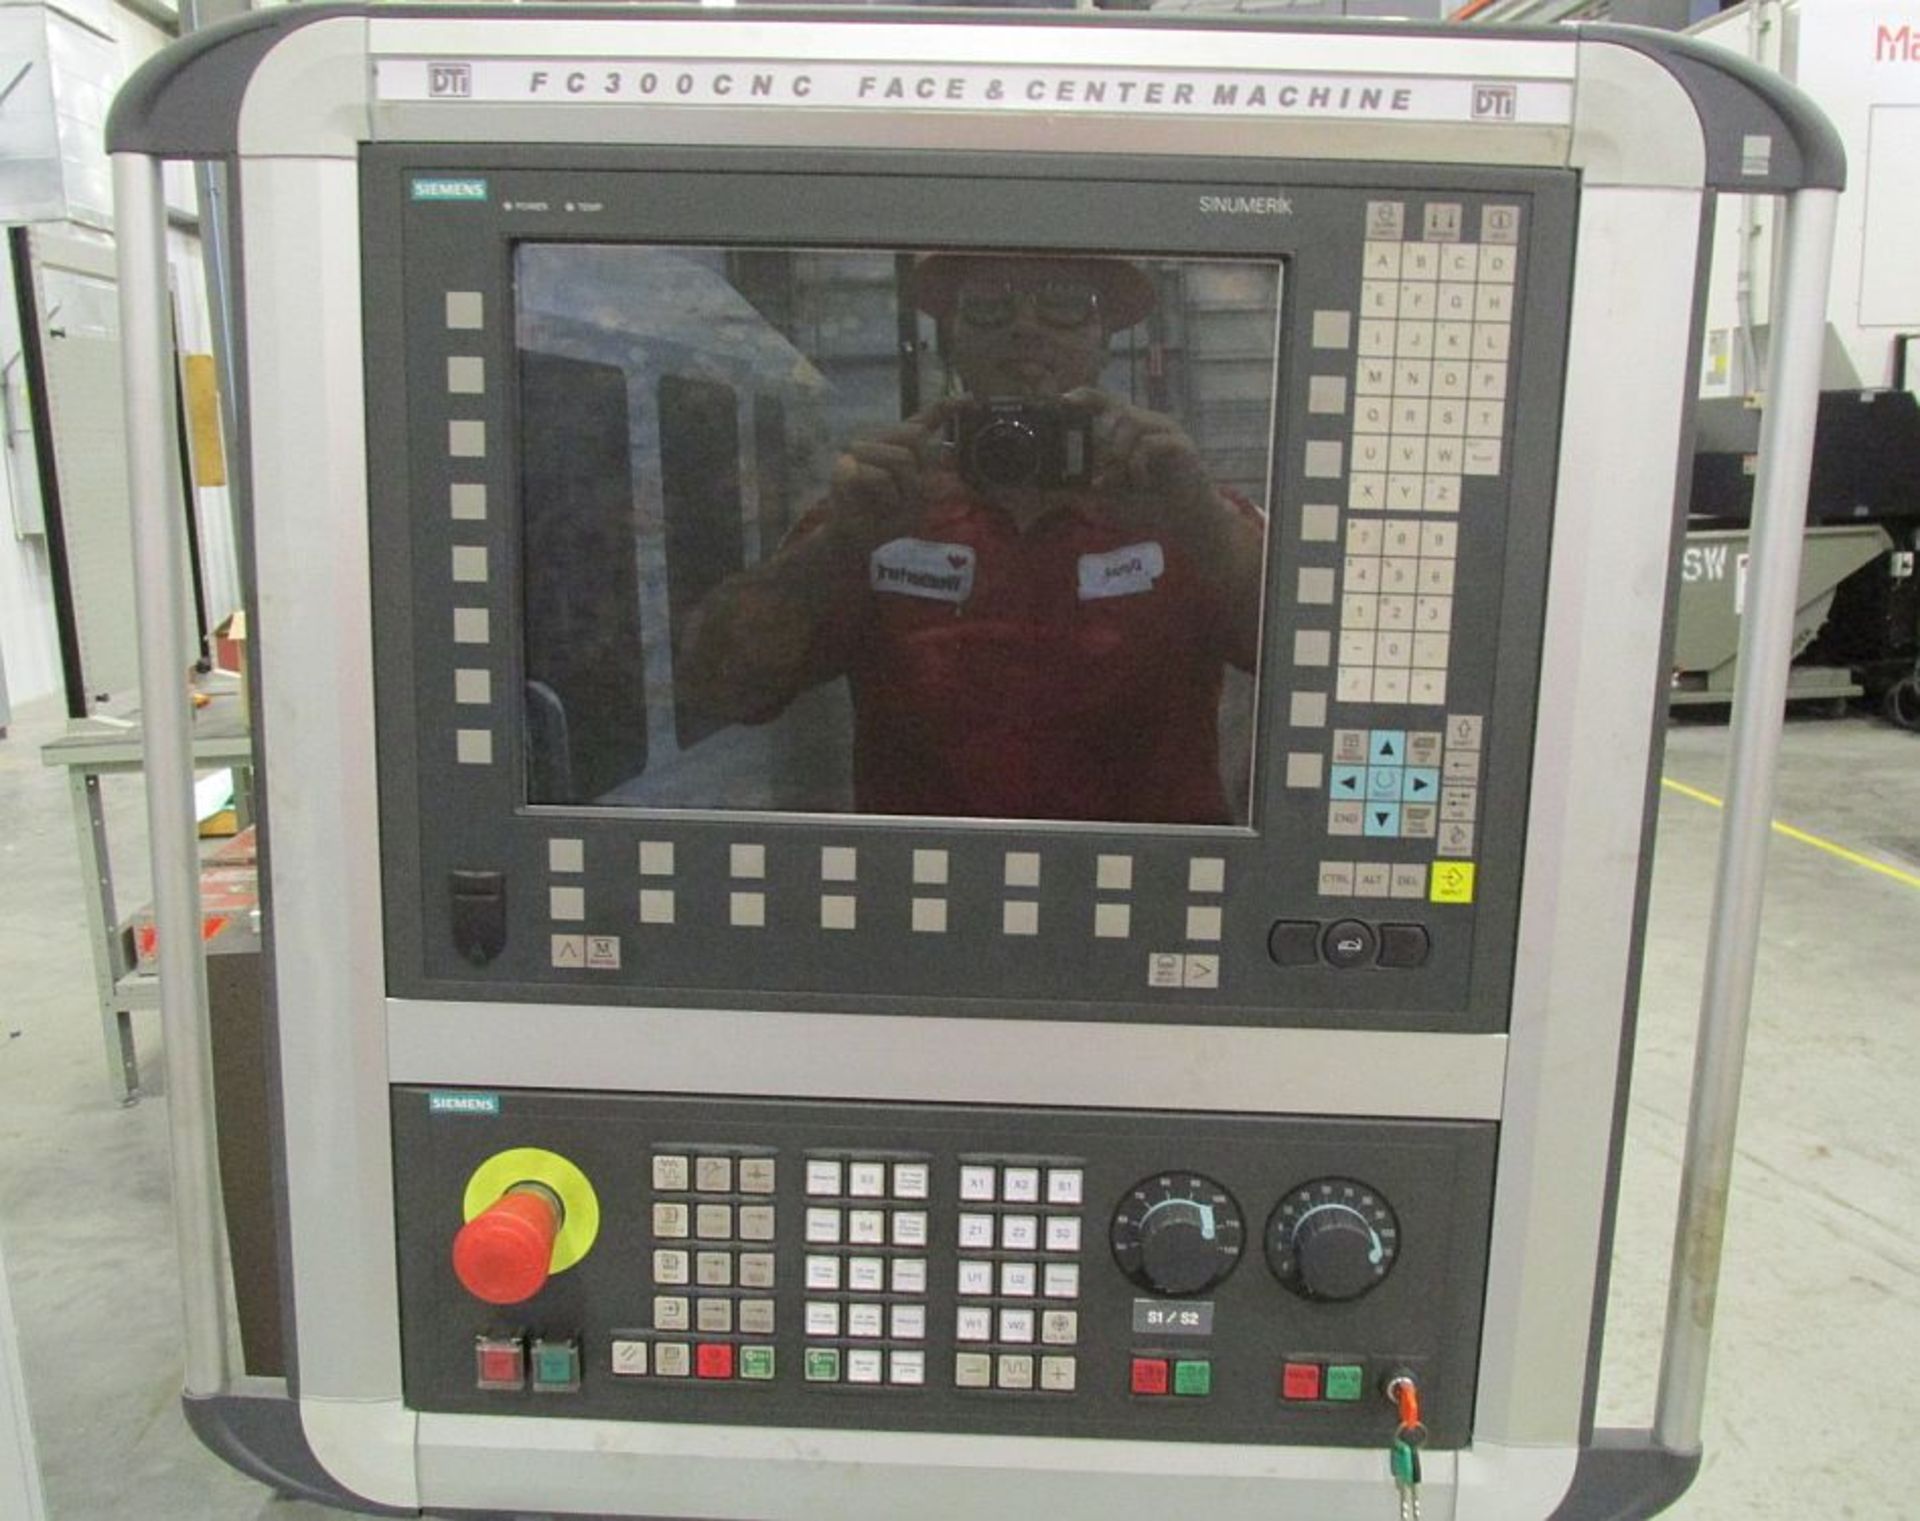 DTI FC300CNC CNC Facing & Centering Machine, Siemens Sinumerik, 12" max OD x 105.7" L, New 2012 - Image 4 of 8